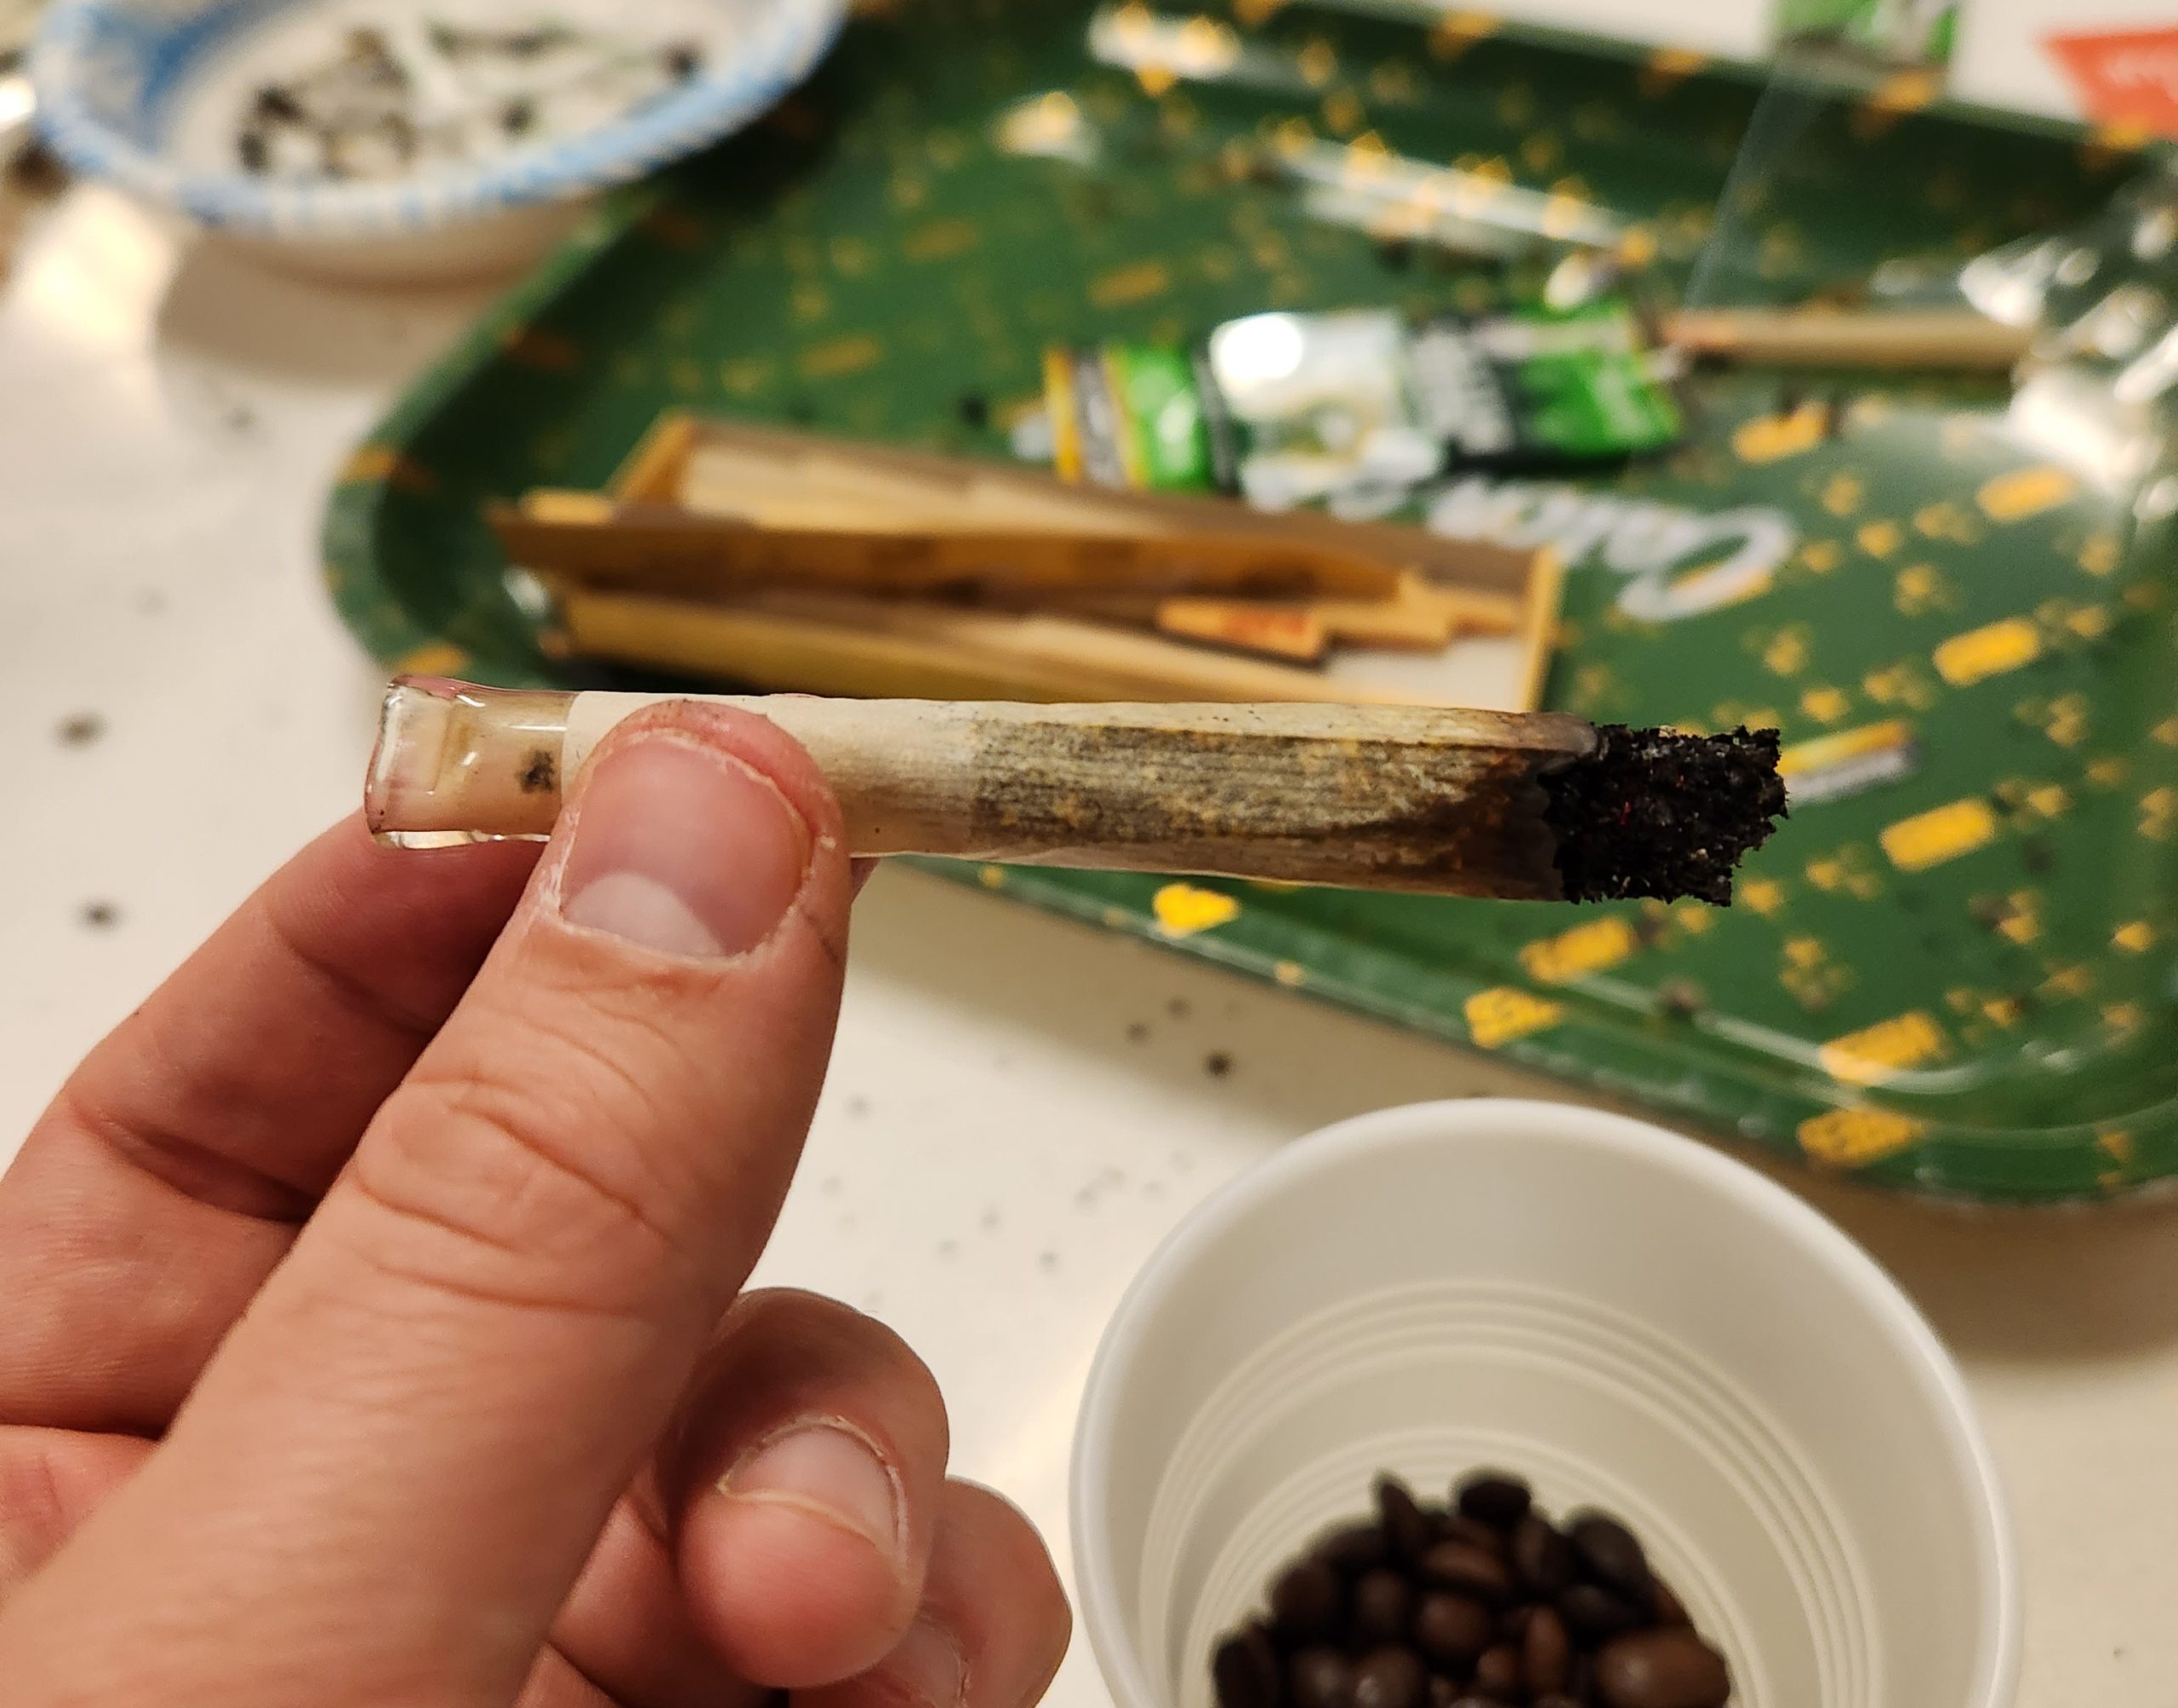 Half smoked joint